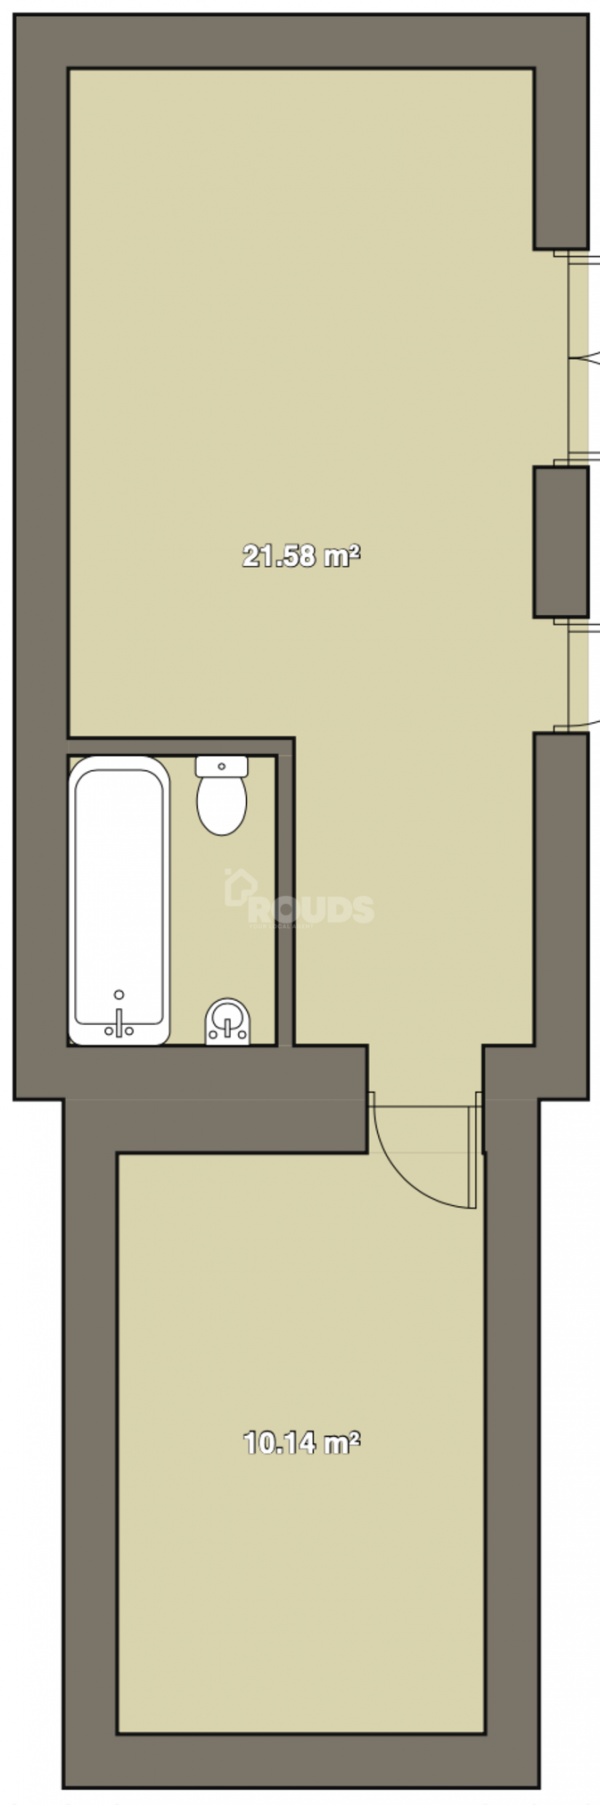 Floor Plan for 1 Bedroom Flat to Rent in Hazelwell Street, Birmingham, B30 2JX, Stirchley, B30, 2JX - £162 pw | £700 pcm